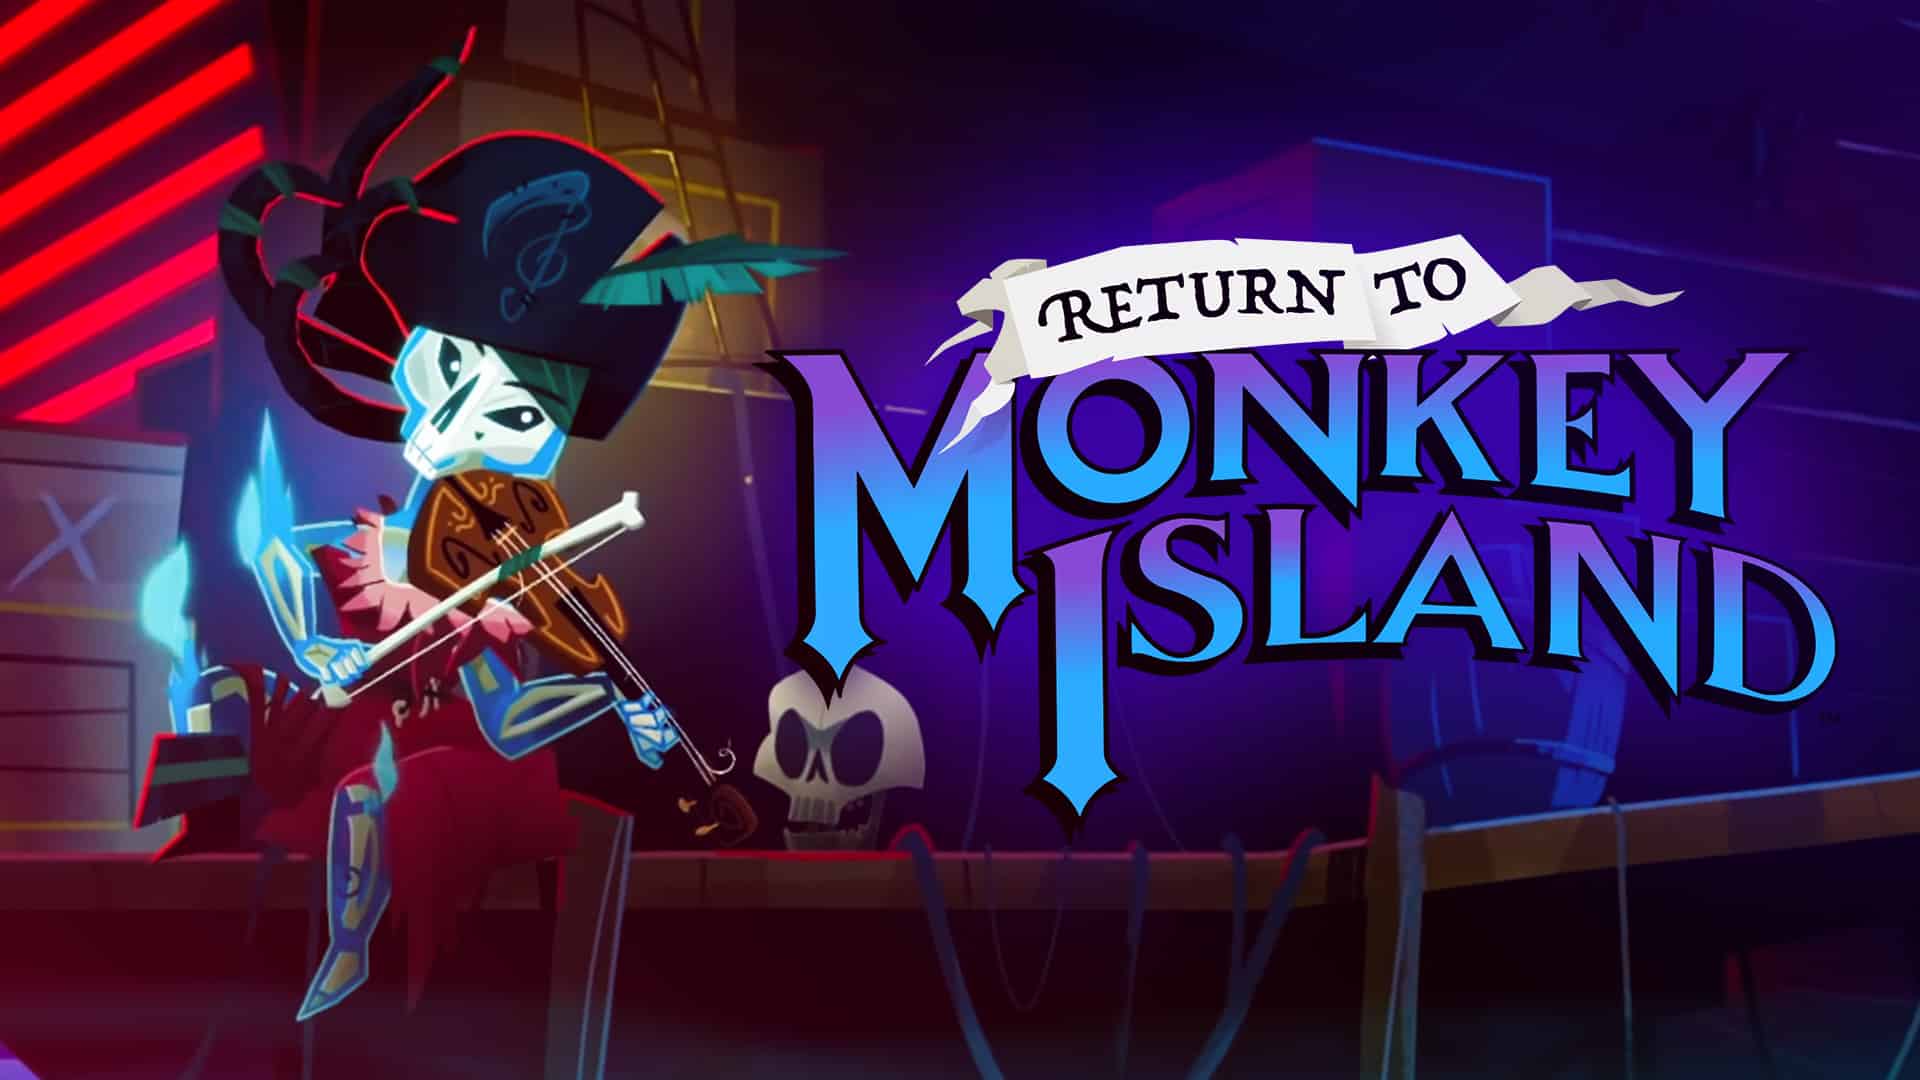 Co-Writer Shares Return To Monkey Island Footage On Twitter